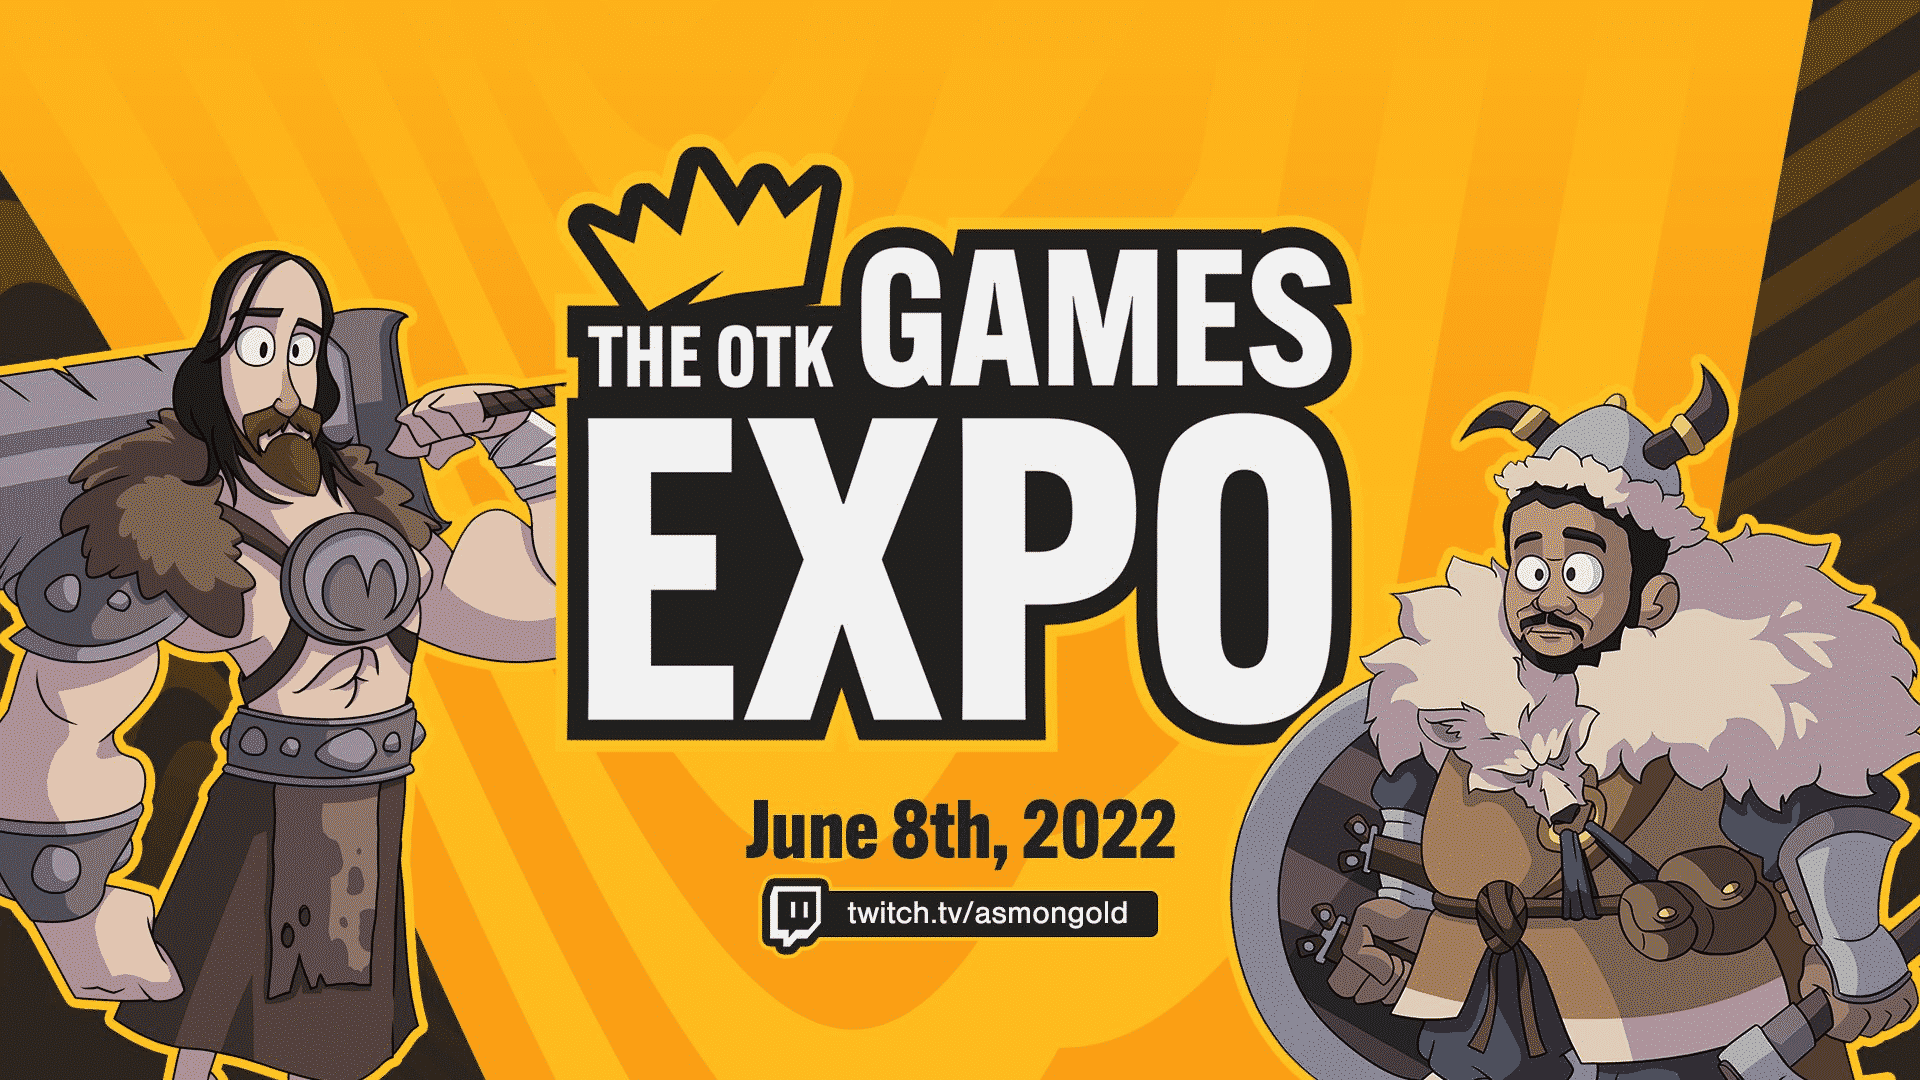 OTK game expo